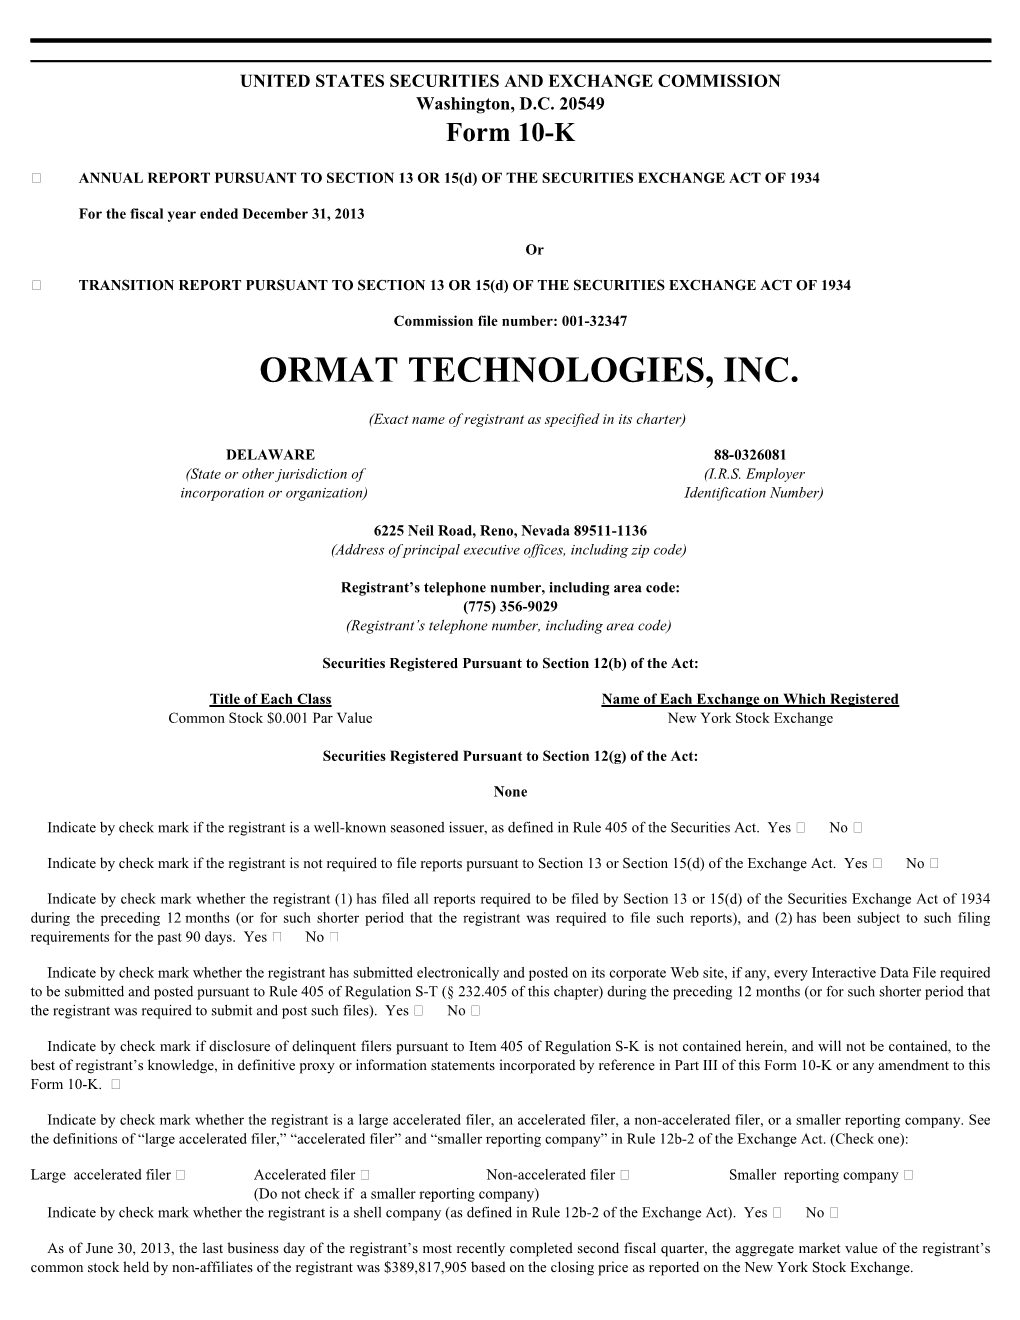 Ormat Technologies, Inc